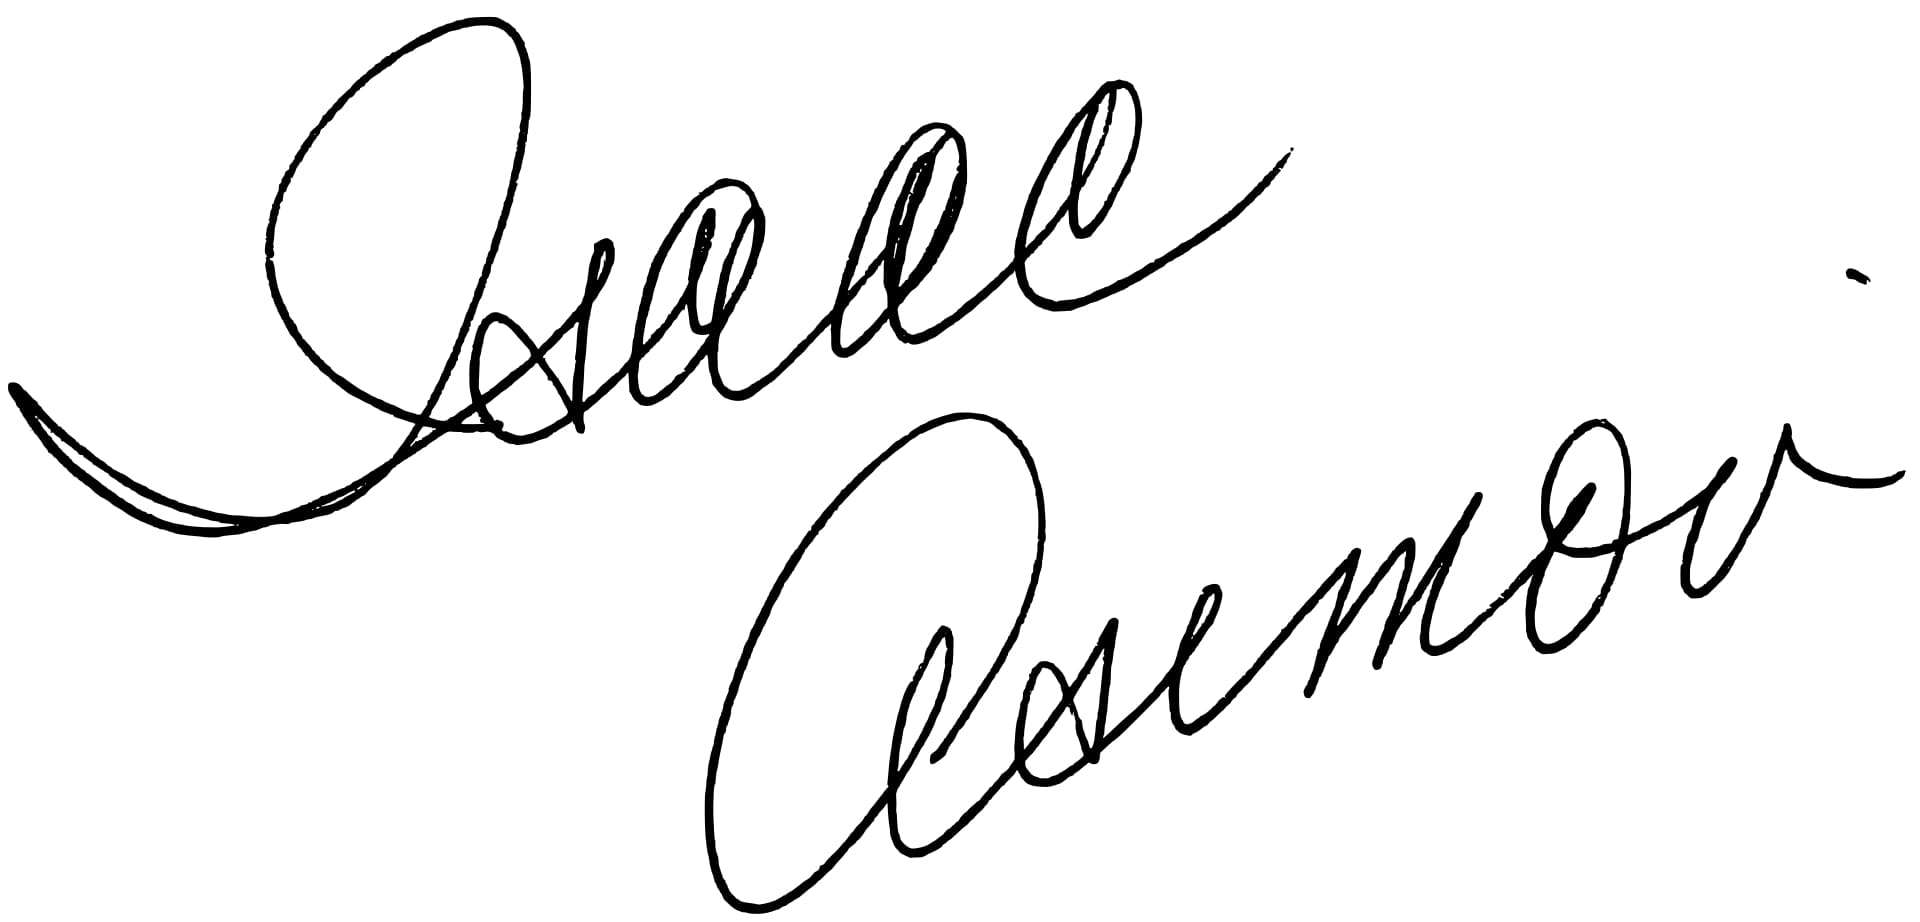 Isaac Asimov Signature